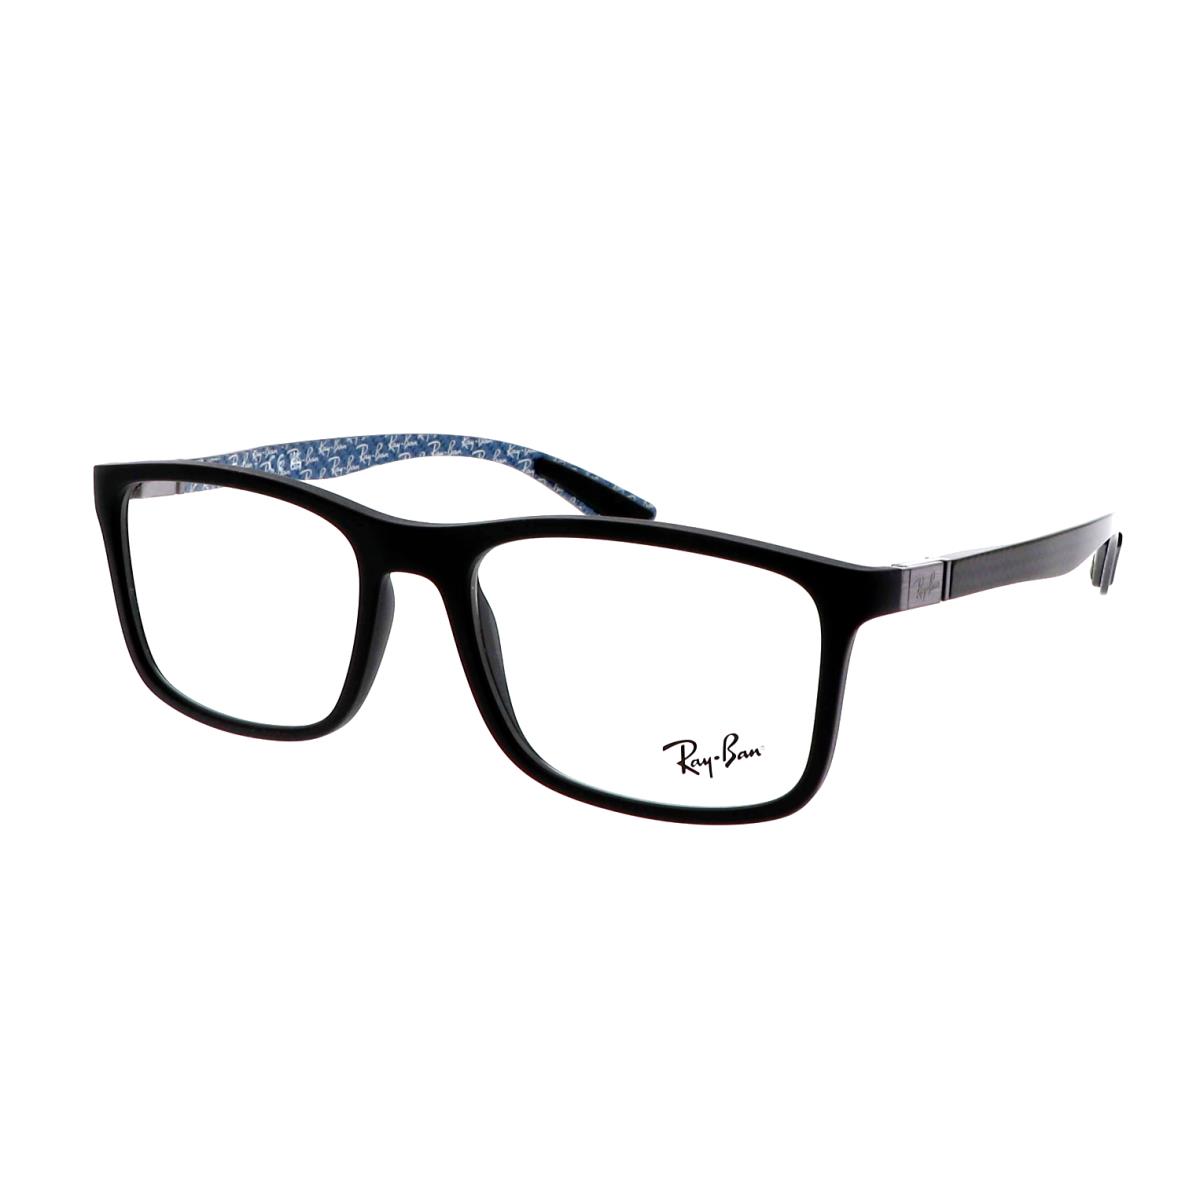 Ray-ban Eyeglasses Tech Series RB 8908 5196 53-18 Black Carbon Fiber Frames